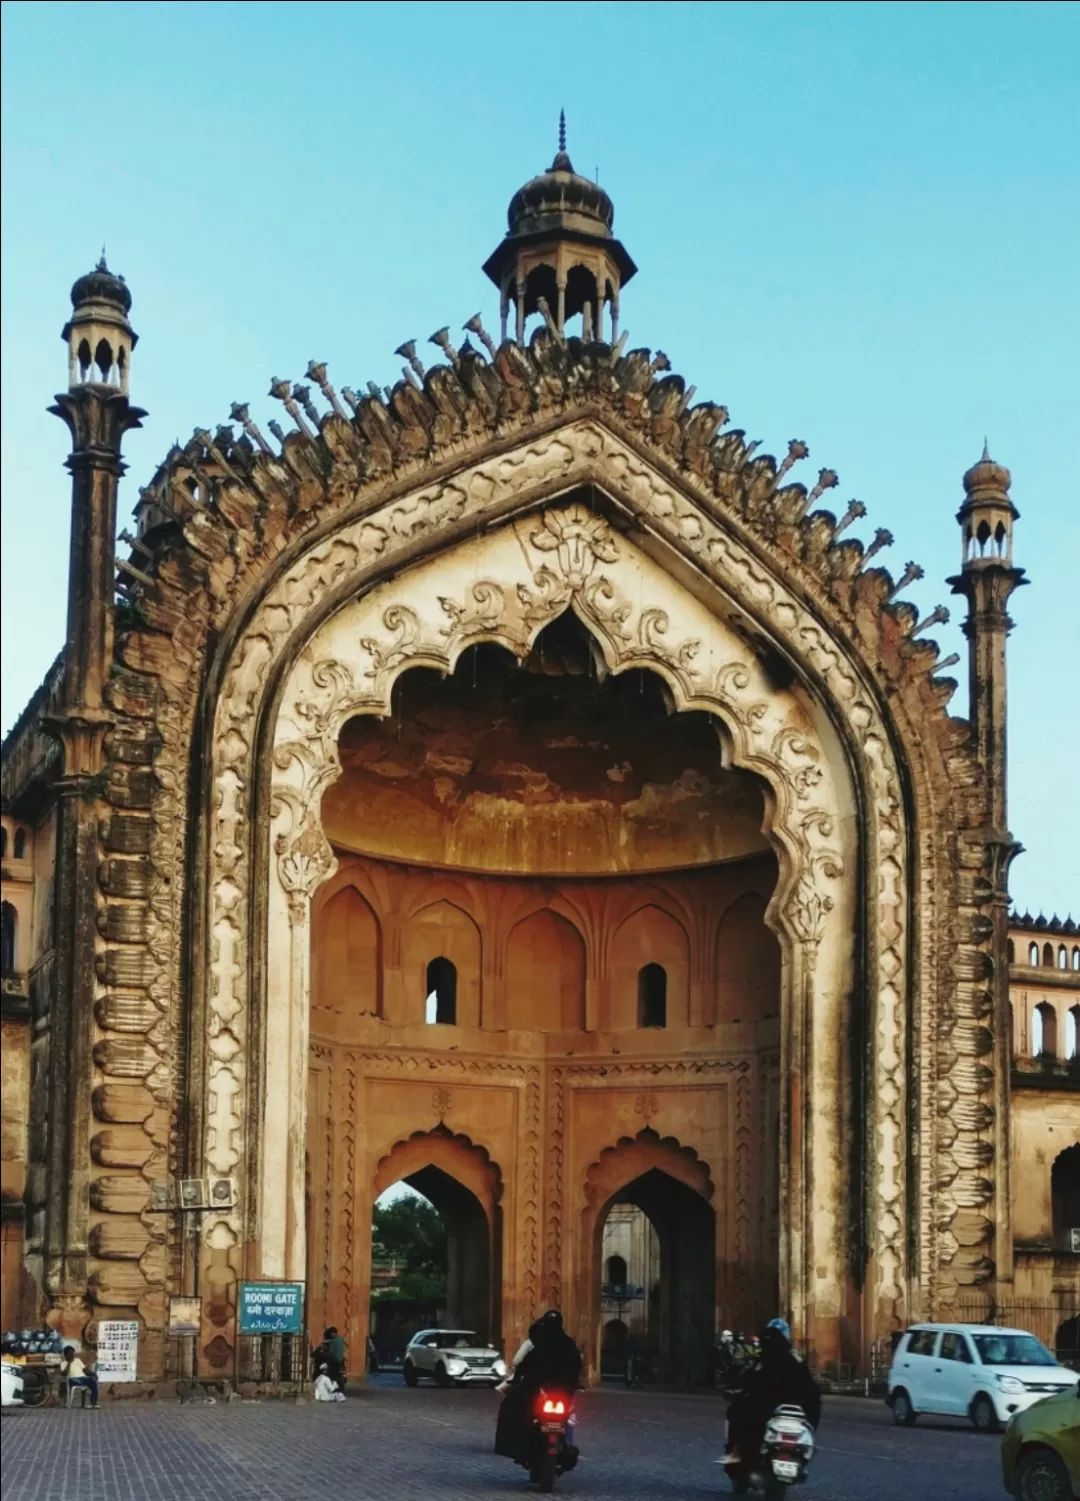 Photo of Roomi gate By Prakhar Tewari